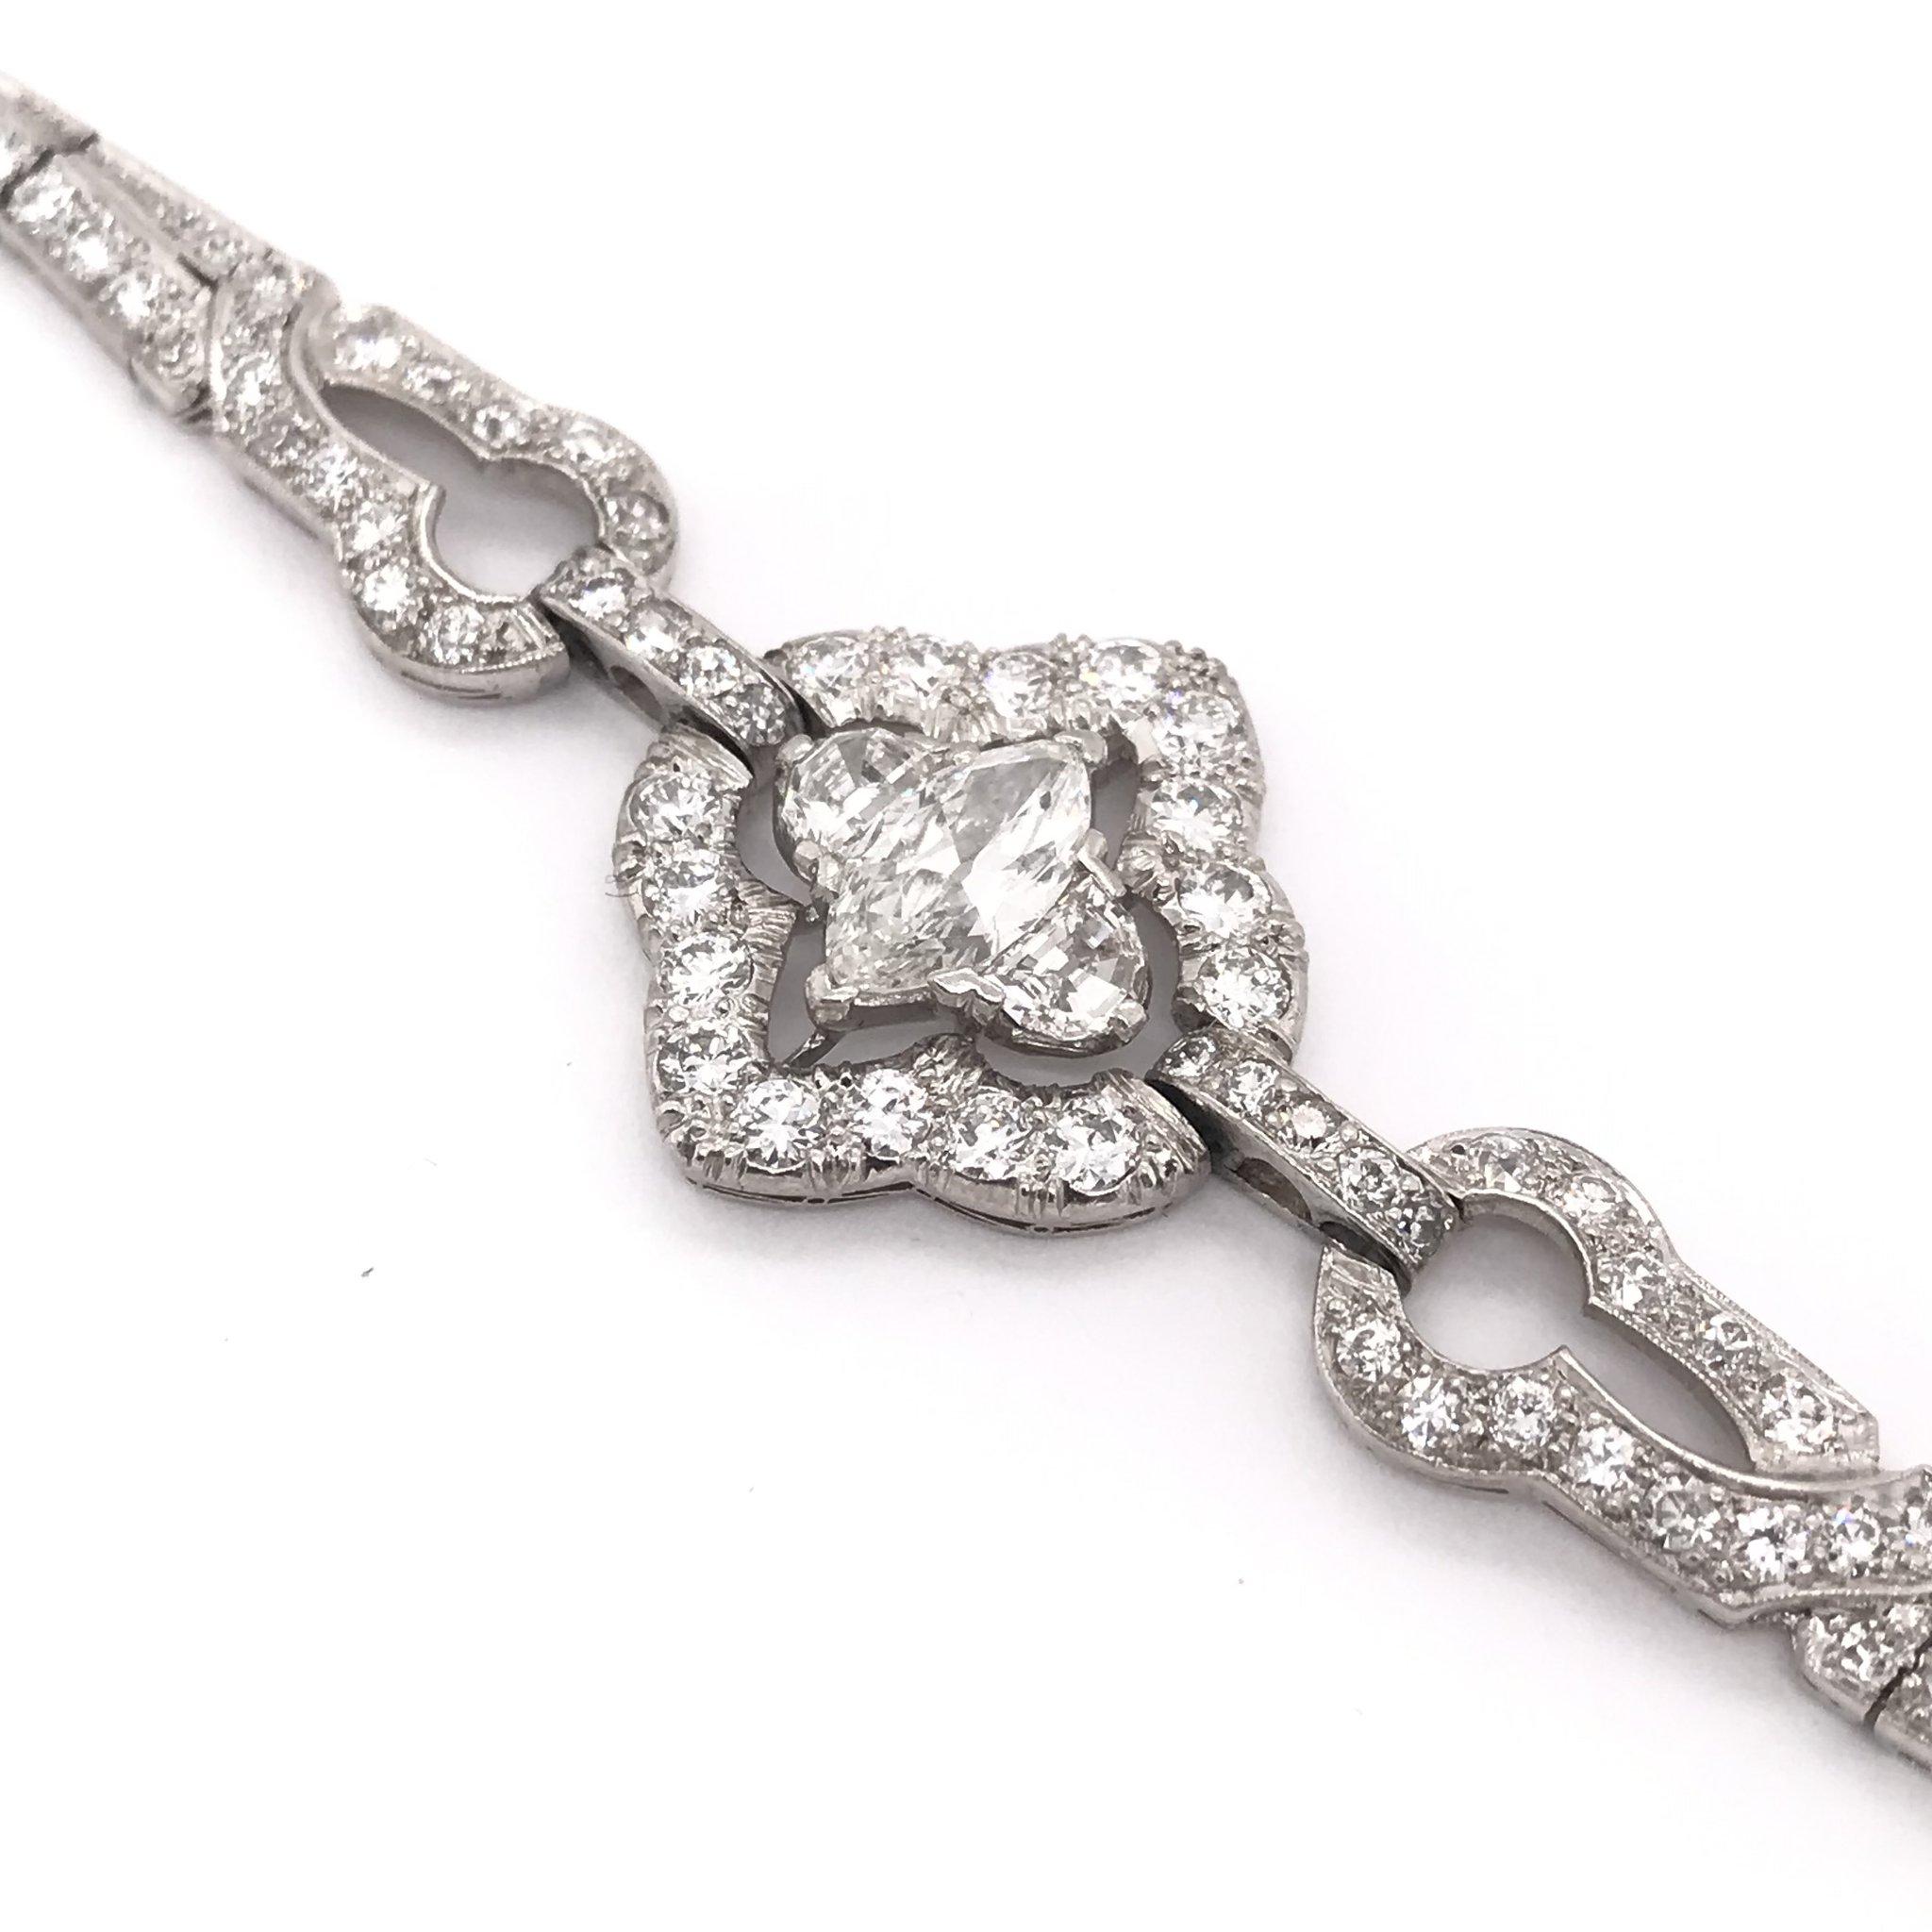 Women's Art Deco 4.0 Carat Marquise Cut Diamond Bracelet